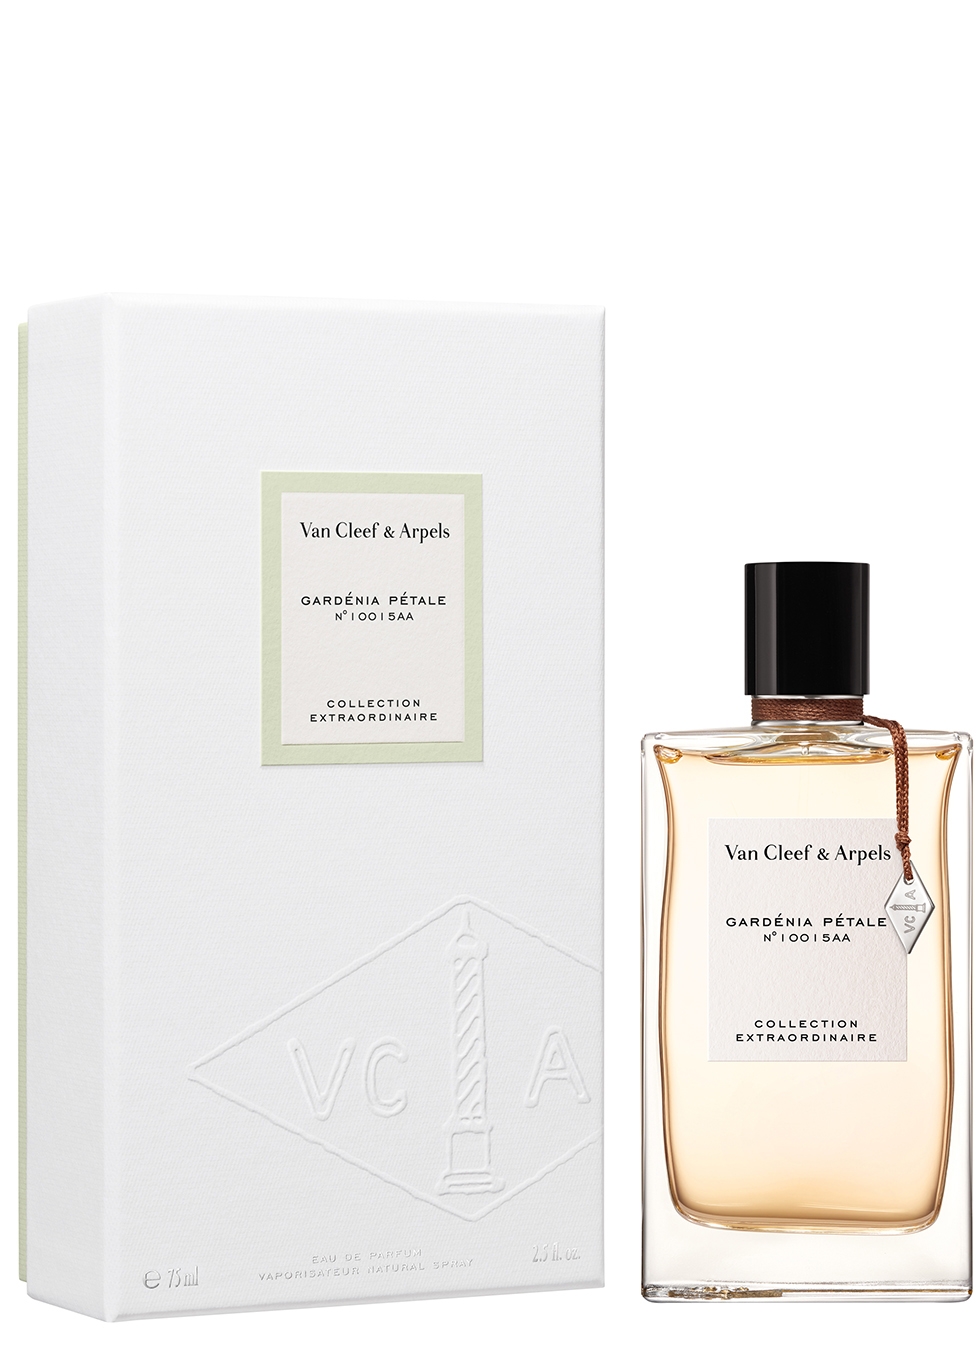 Van Cleef & Arpels Gardenia Petale Eau De Parfum 75ml - Harvey Nichols